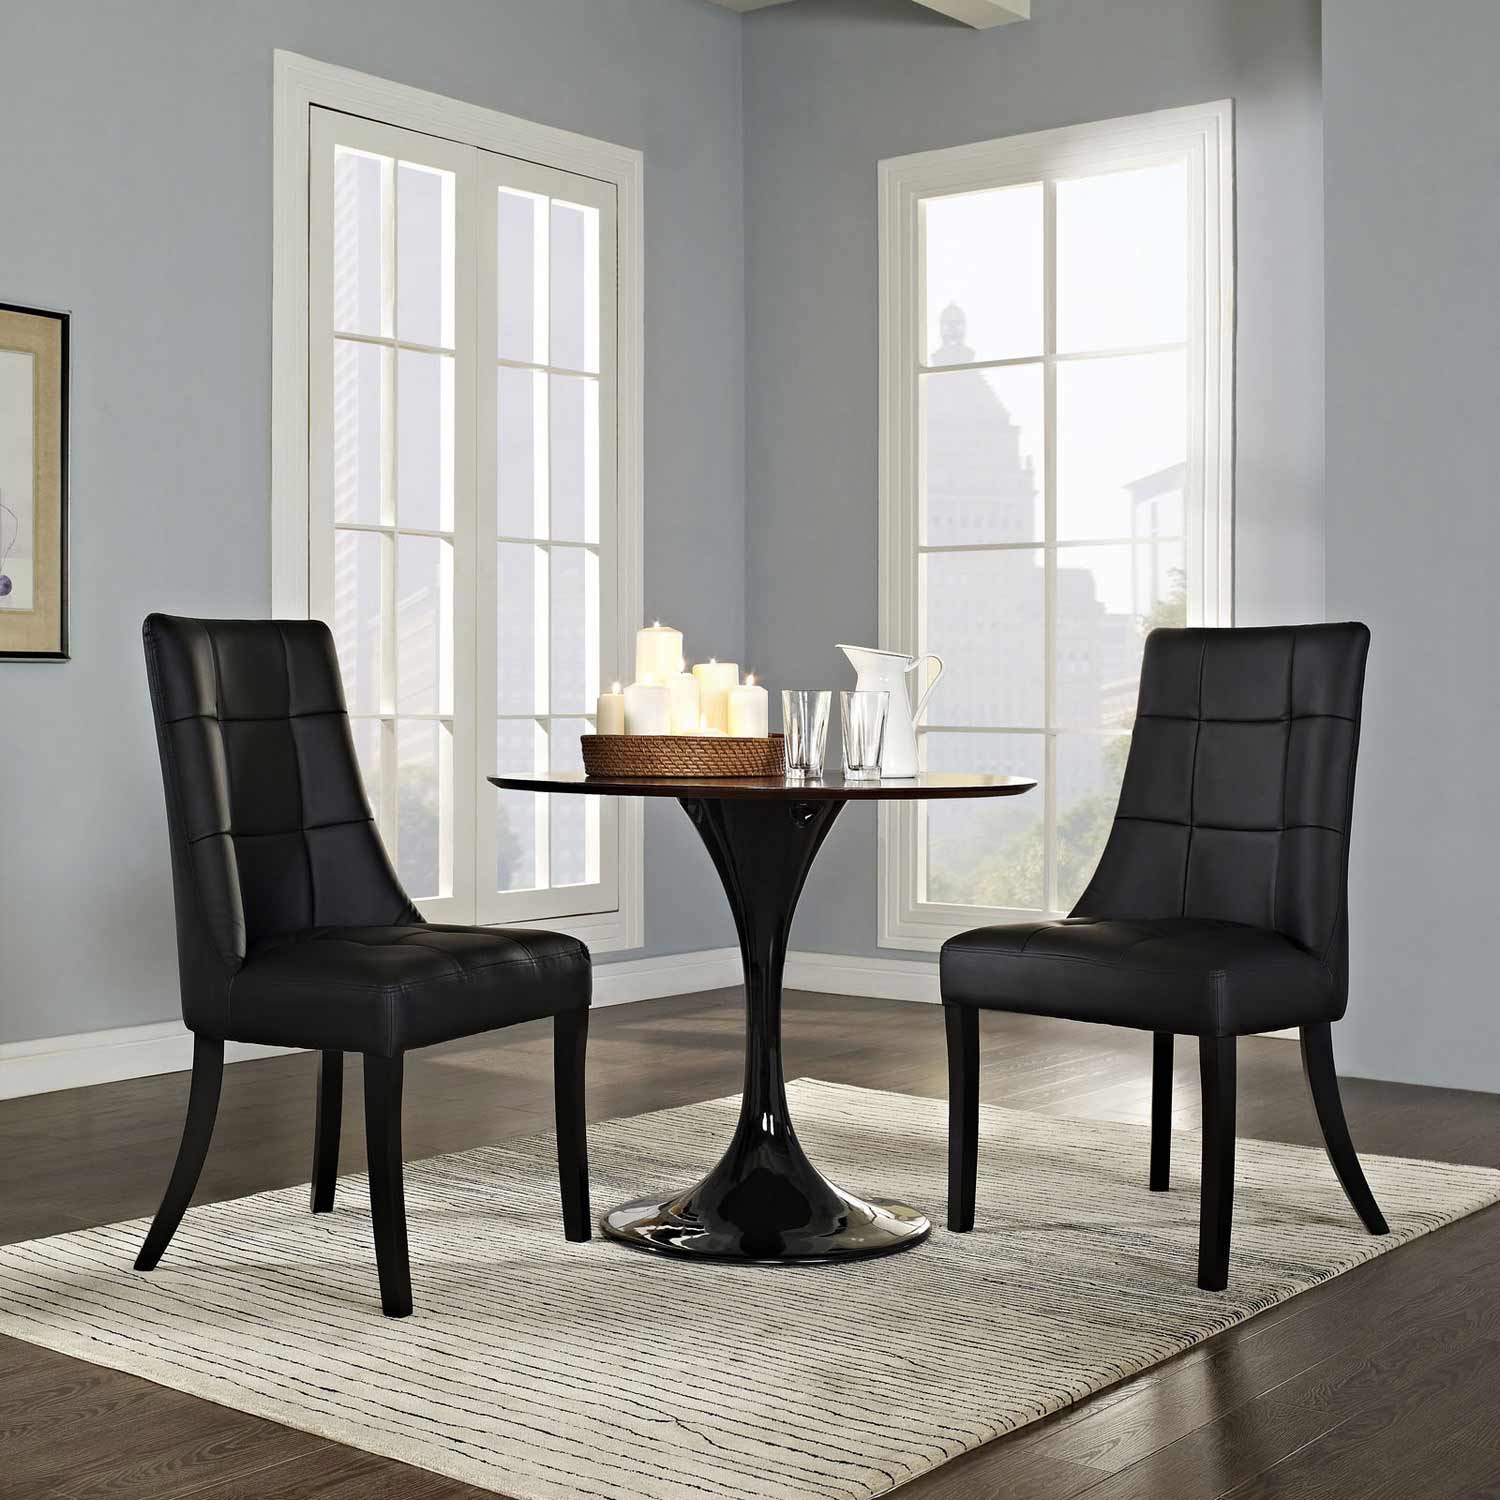 Modway Noblesse Vinyl Dining Chair Set of 2 - Black